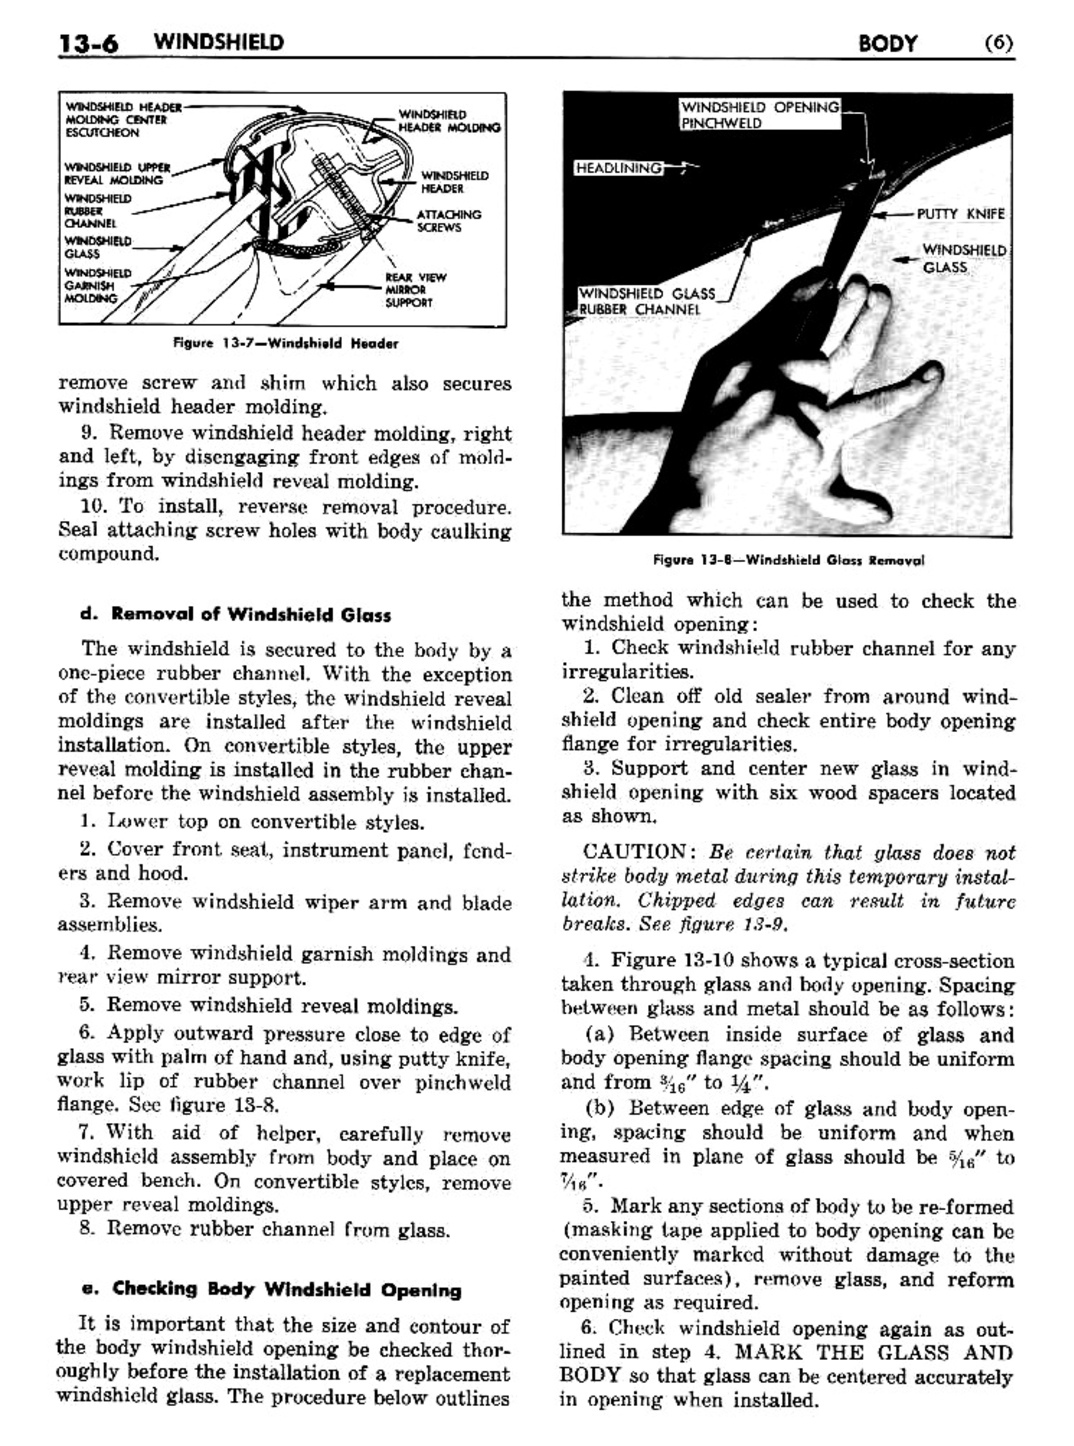 n_1957 Buick Body Service Manual-008-008.jpg